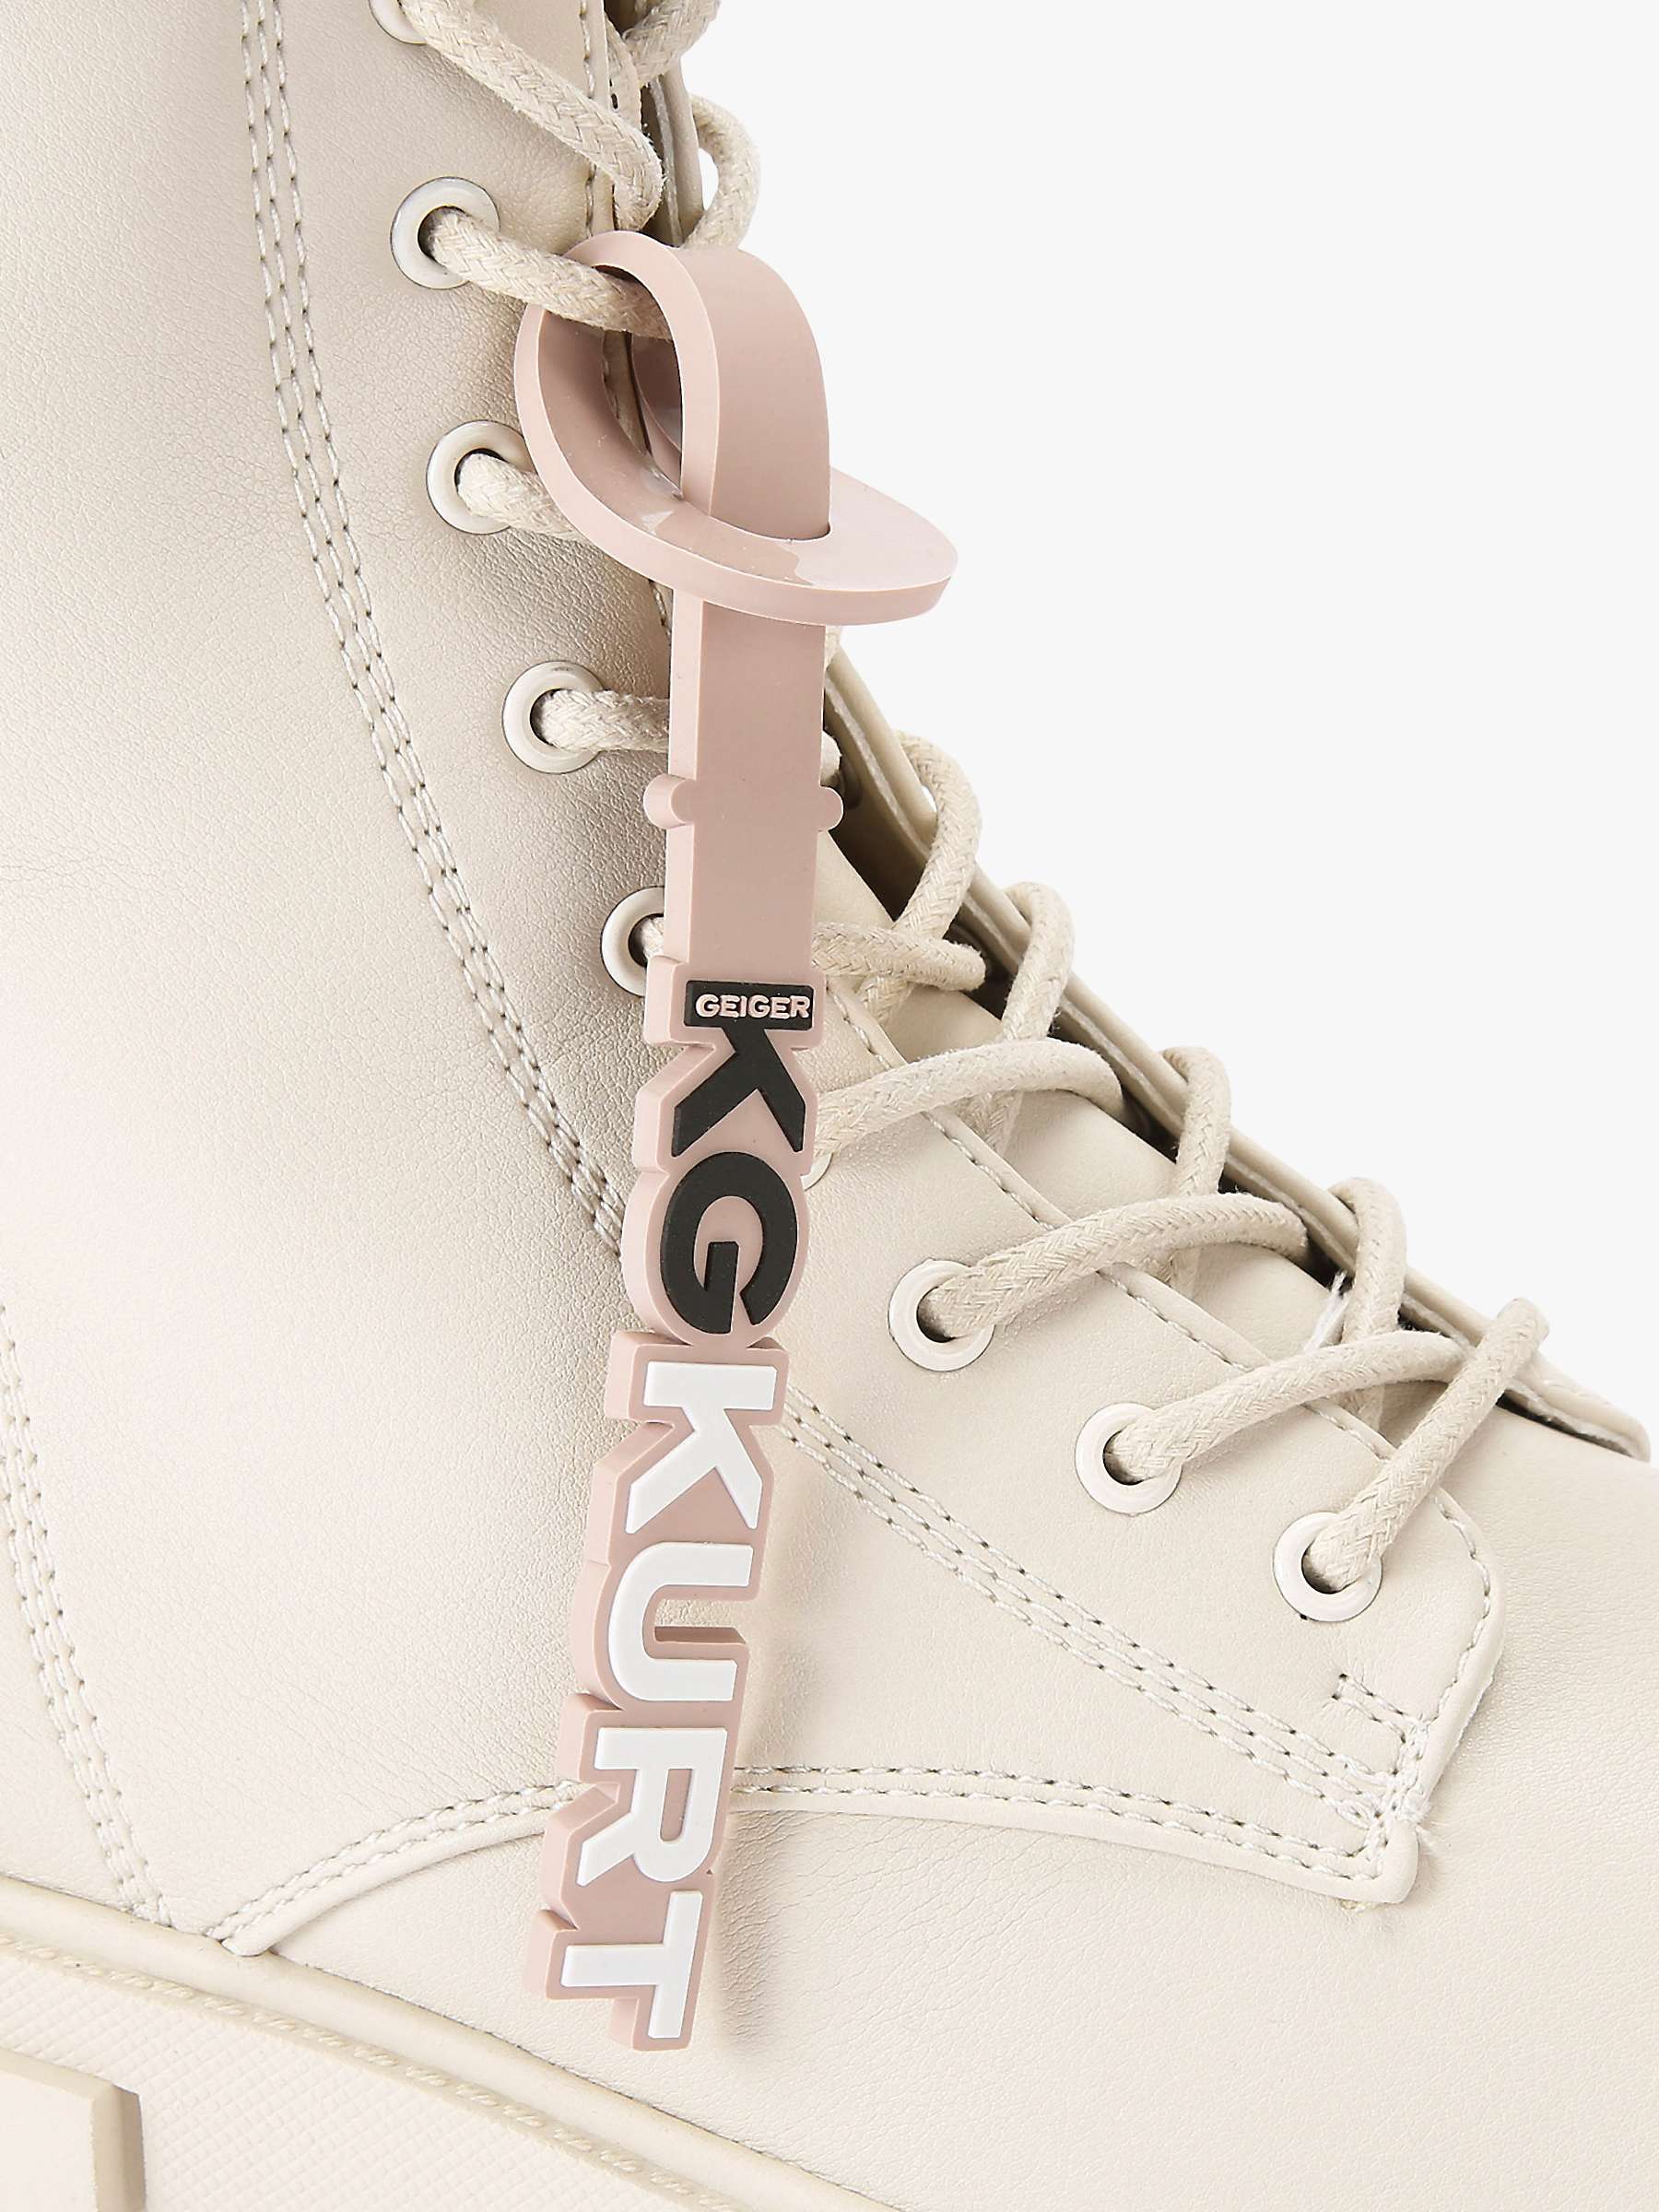 Buy KG Kurt Geiger Trekker Lace Up Ankle Boots, Cream Online at johnlewis.com